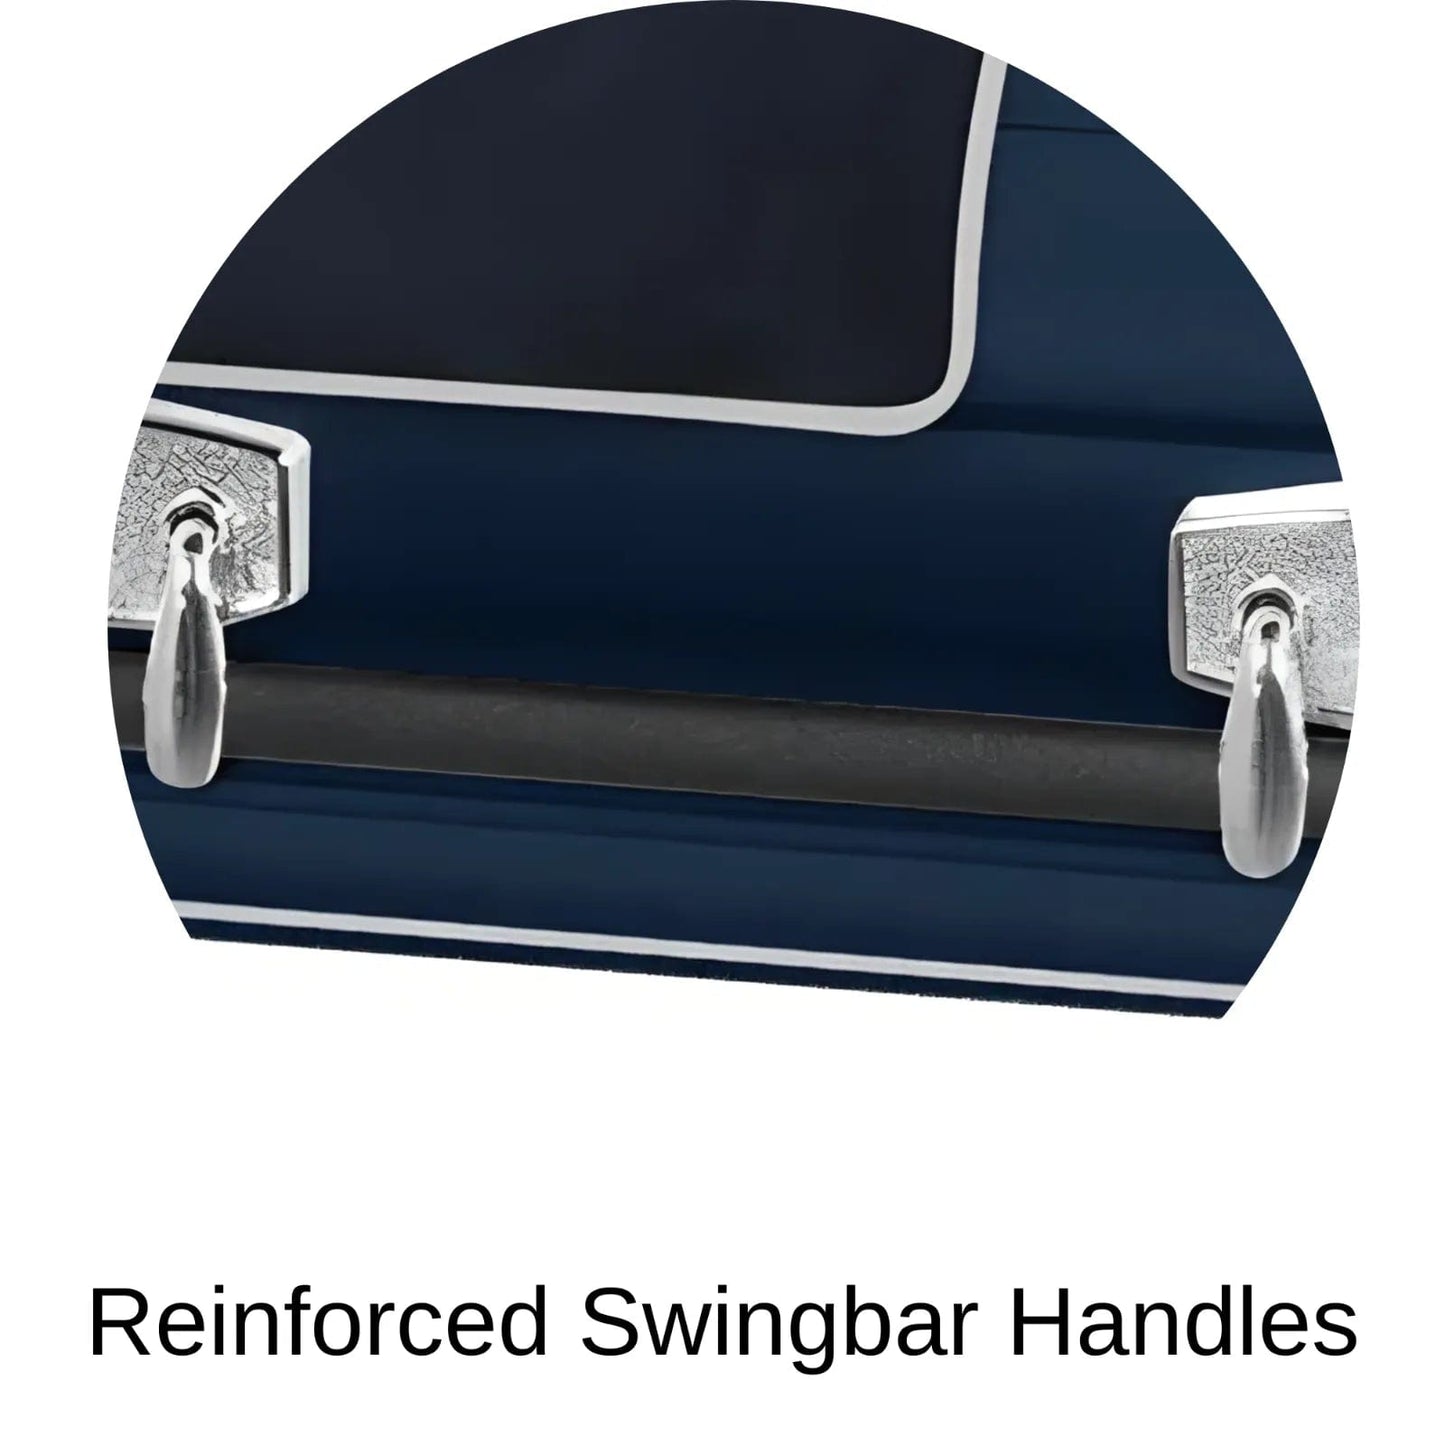 Reinforced Swingbar handles of Titan Casket Veteran Select Casket Airforce